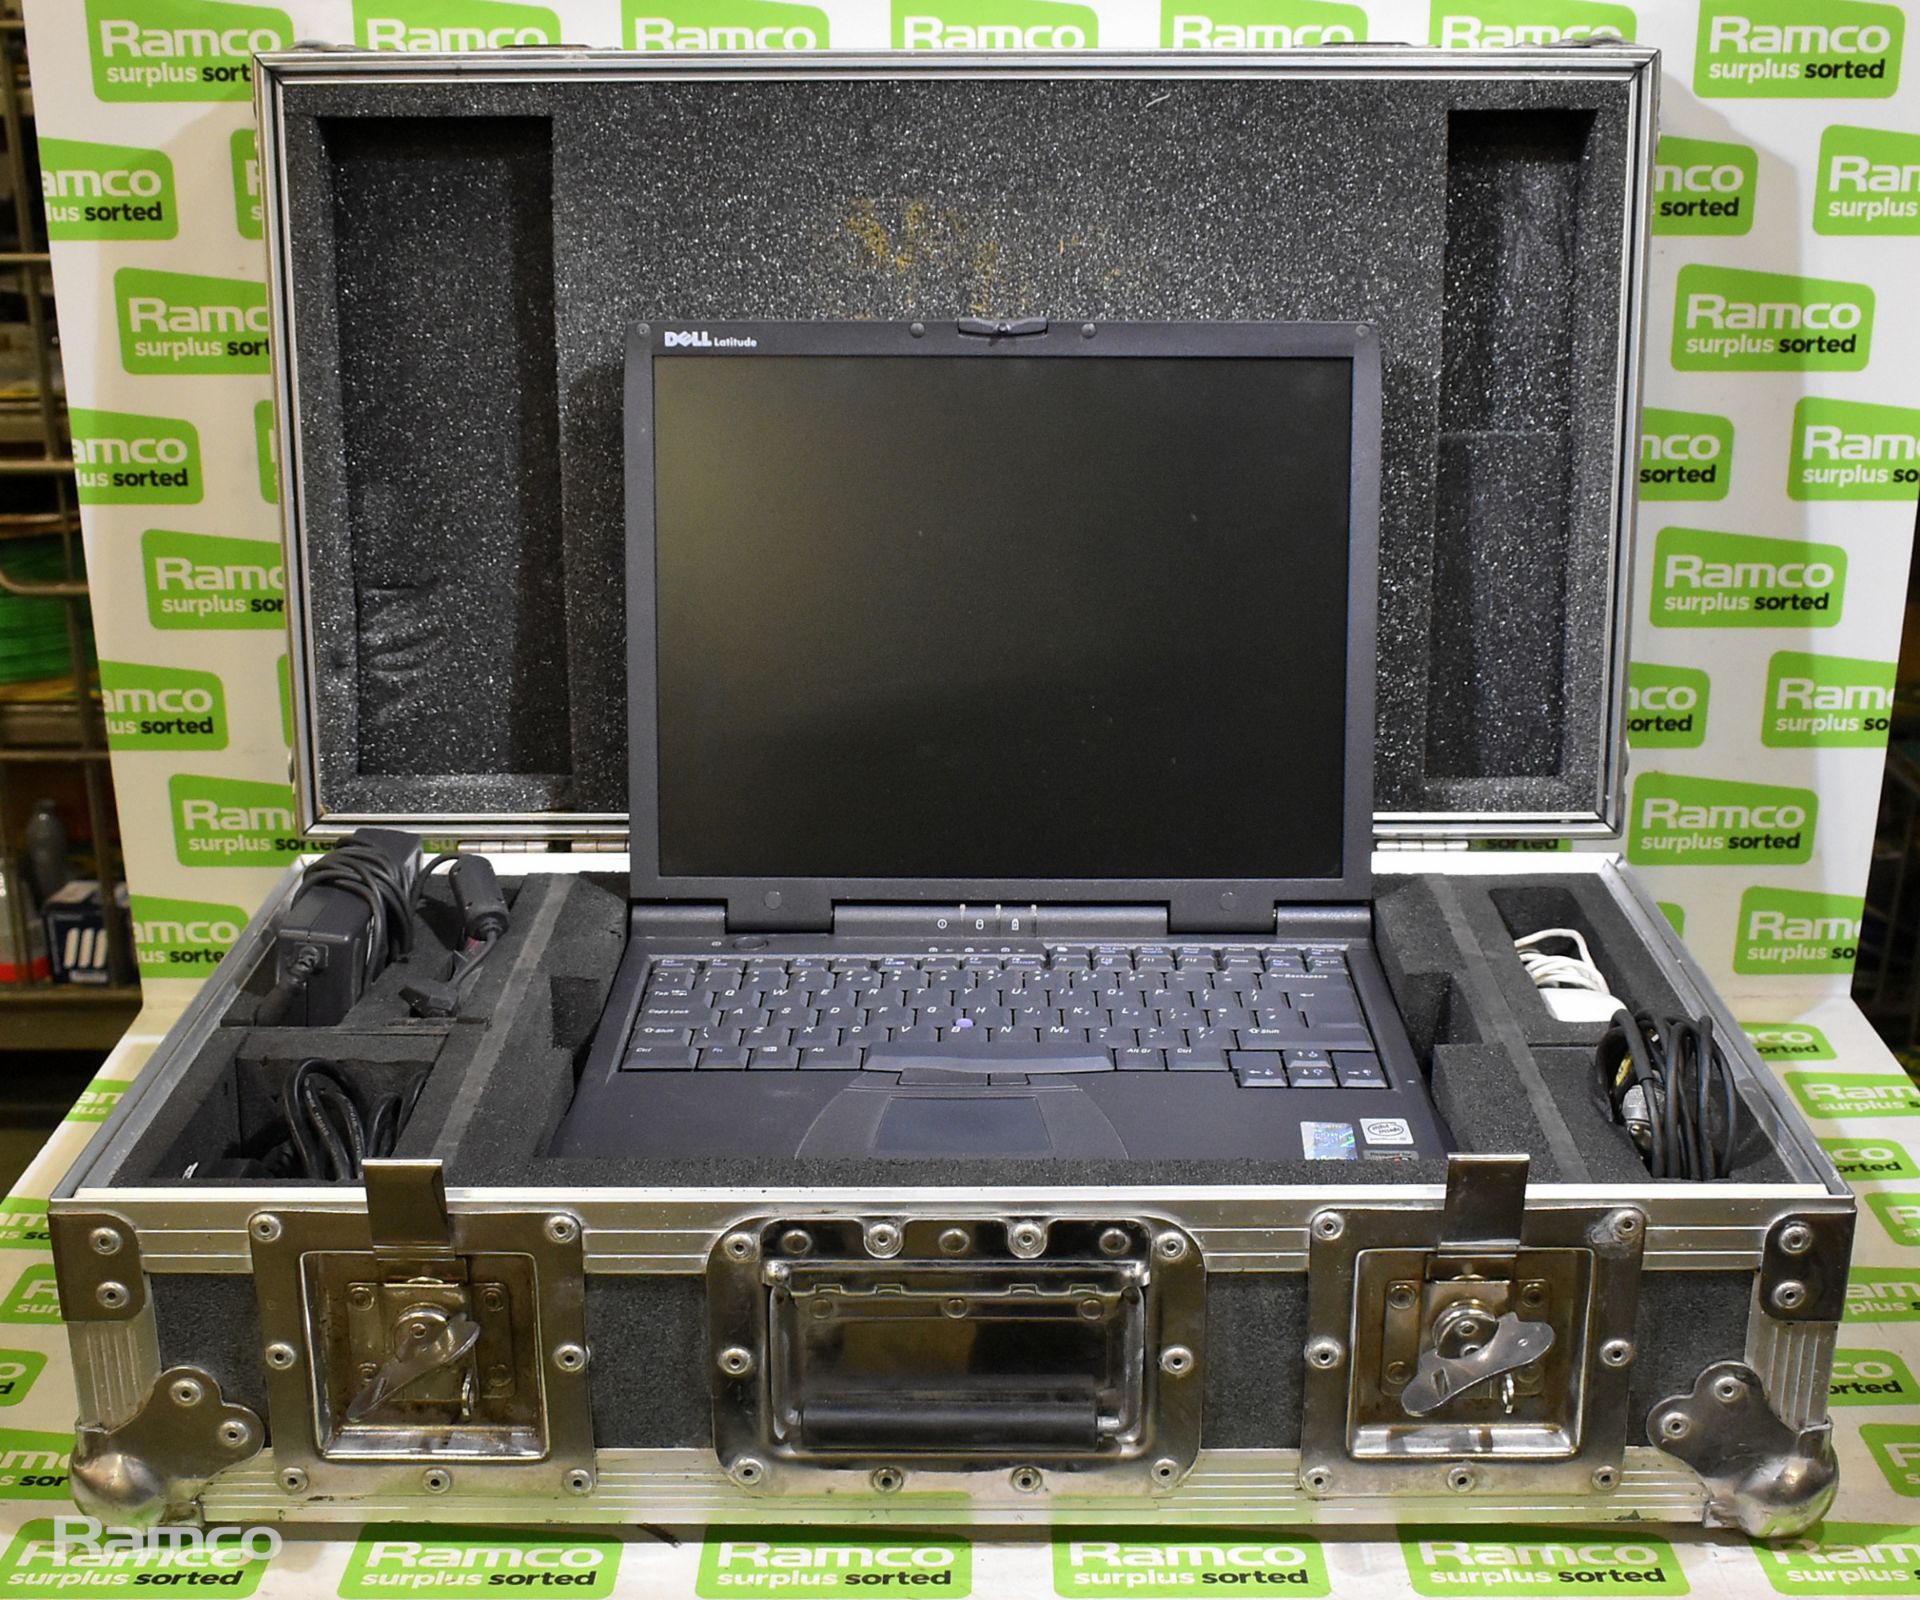 Dell Latitude CPx laptop with accessories and aluminium case